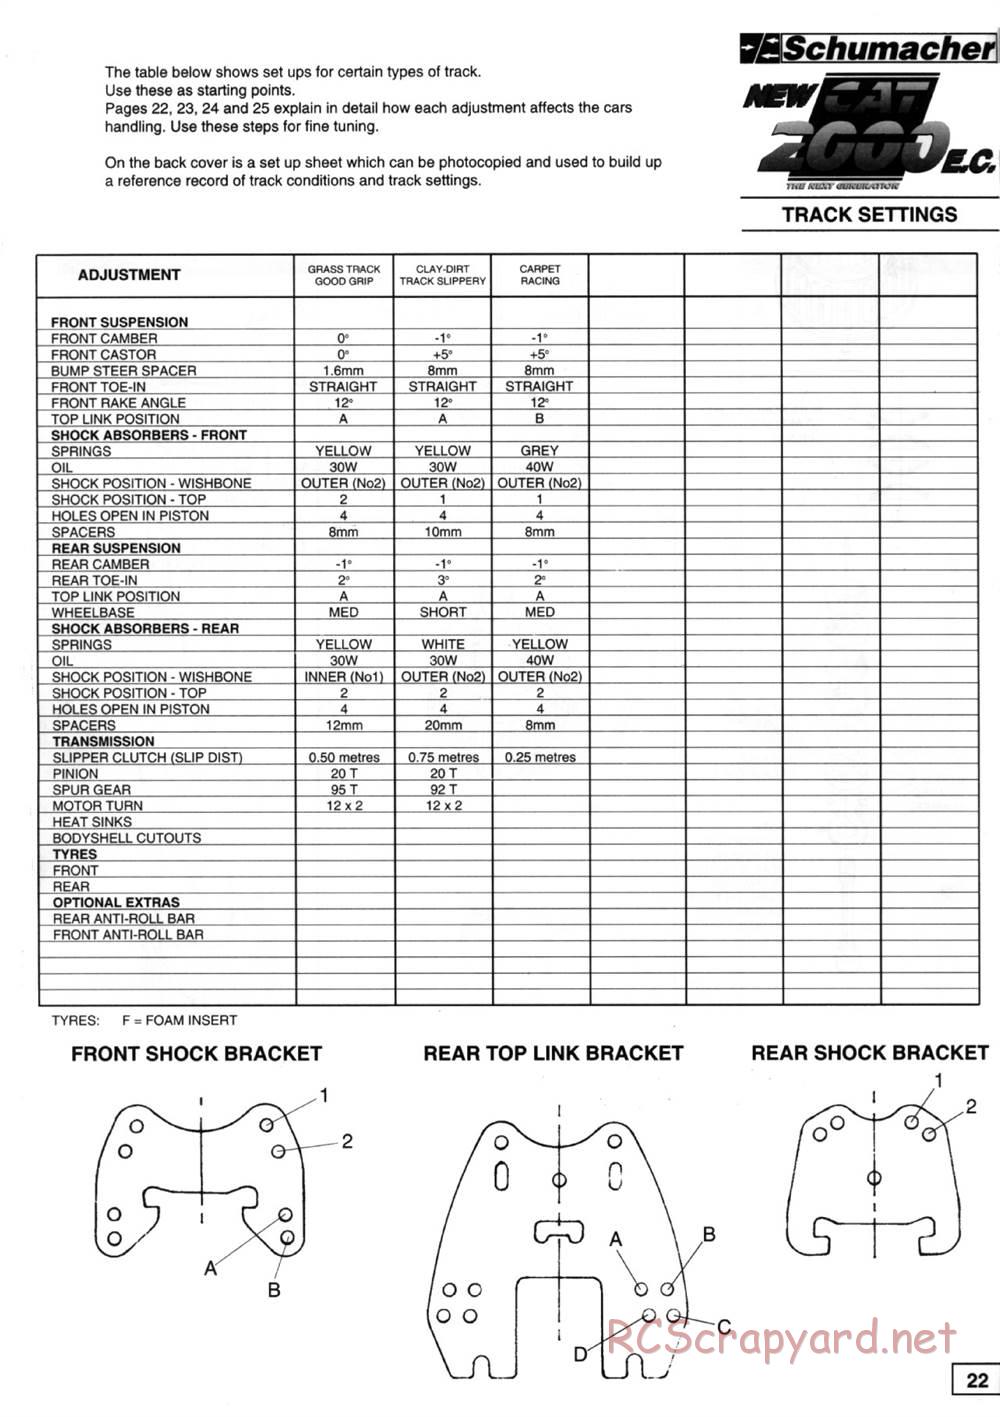 Schumacher - Cat 2000 EC - Manual - Page 28